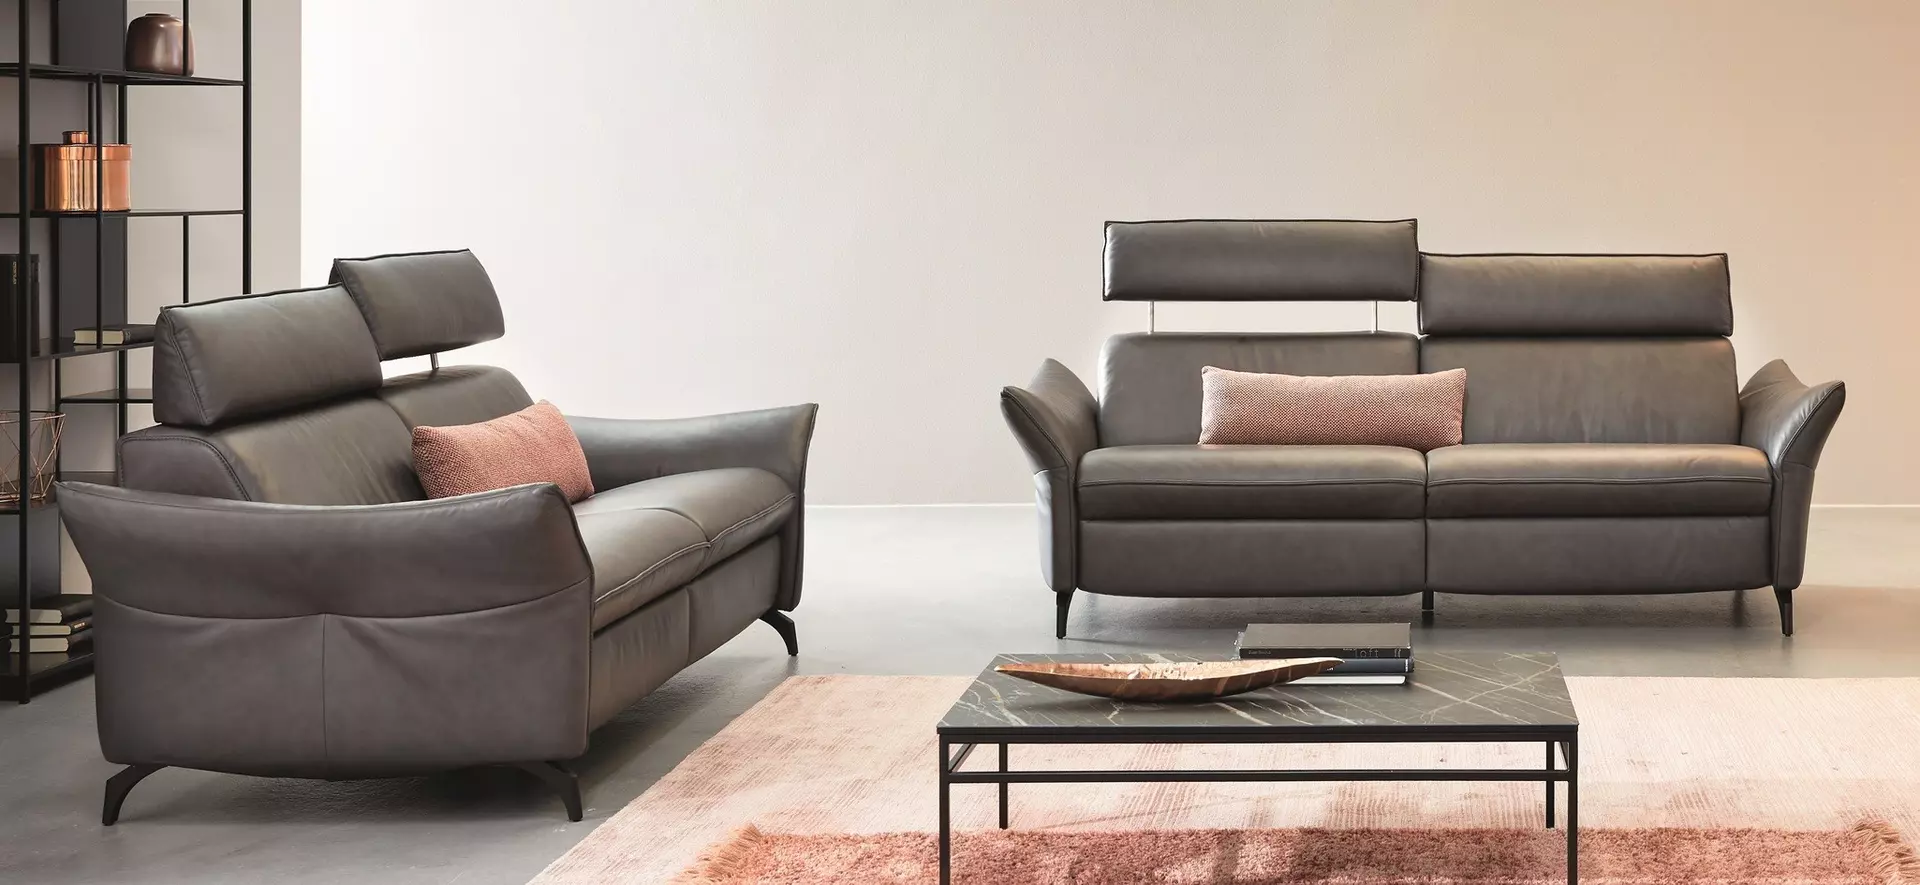 sofa 3-sitzer grau himolla | möbel inhofer